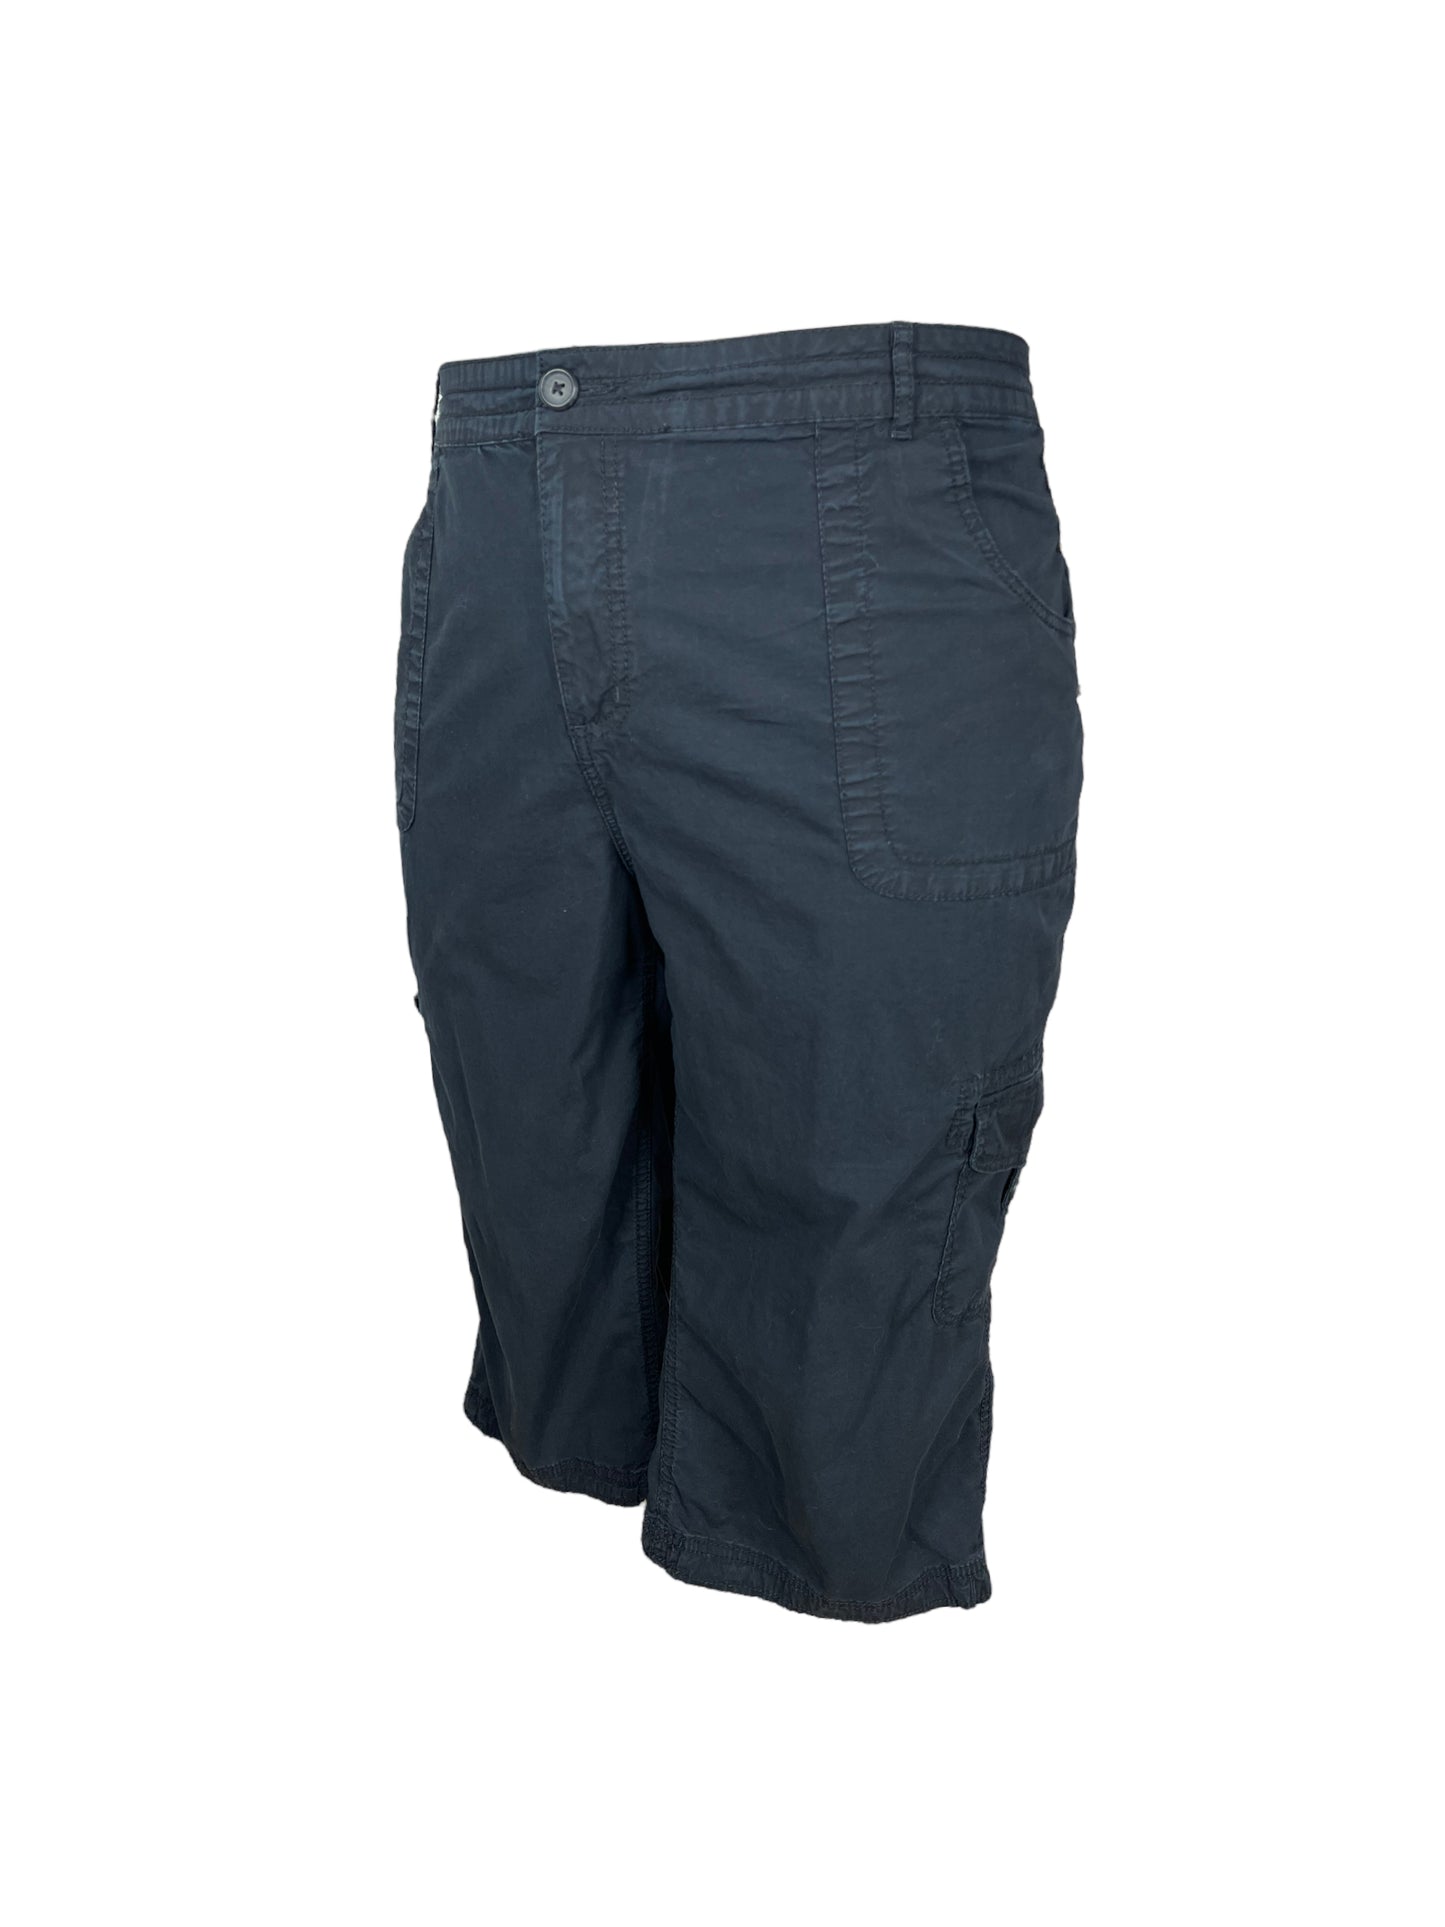 Black Cargo Pants Capri